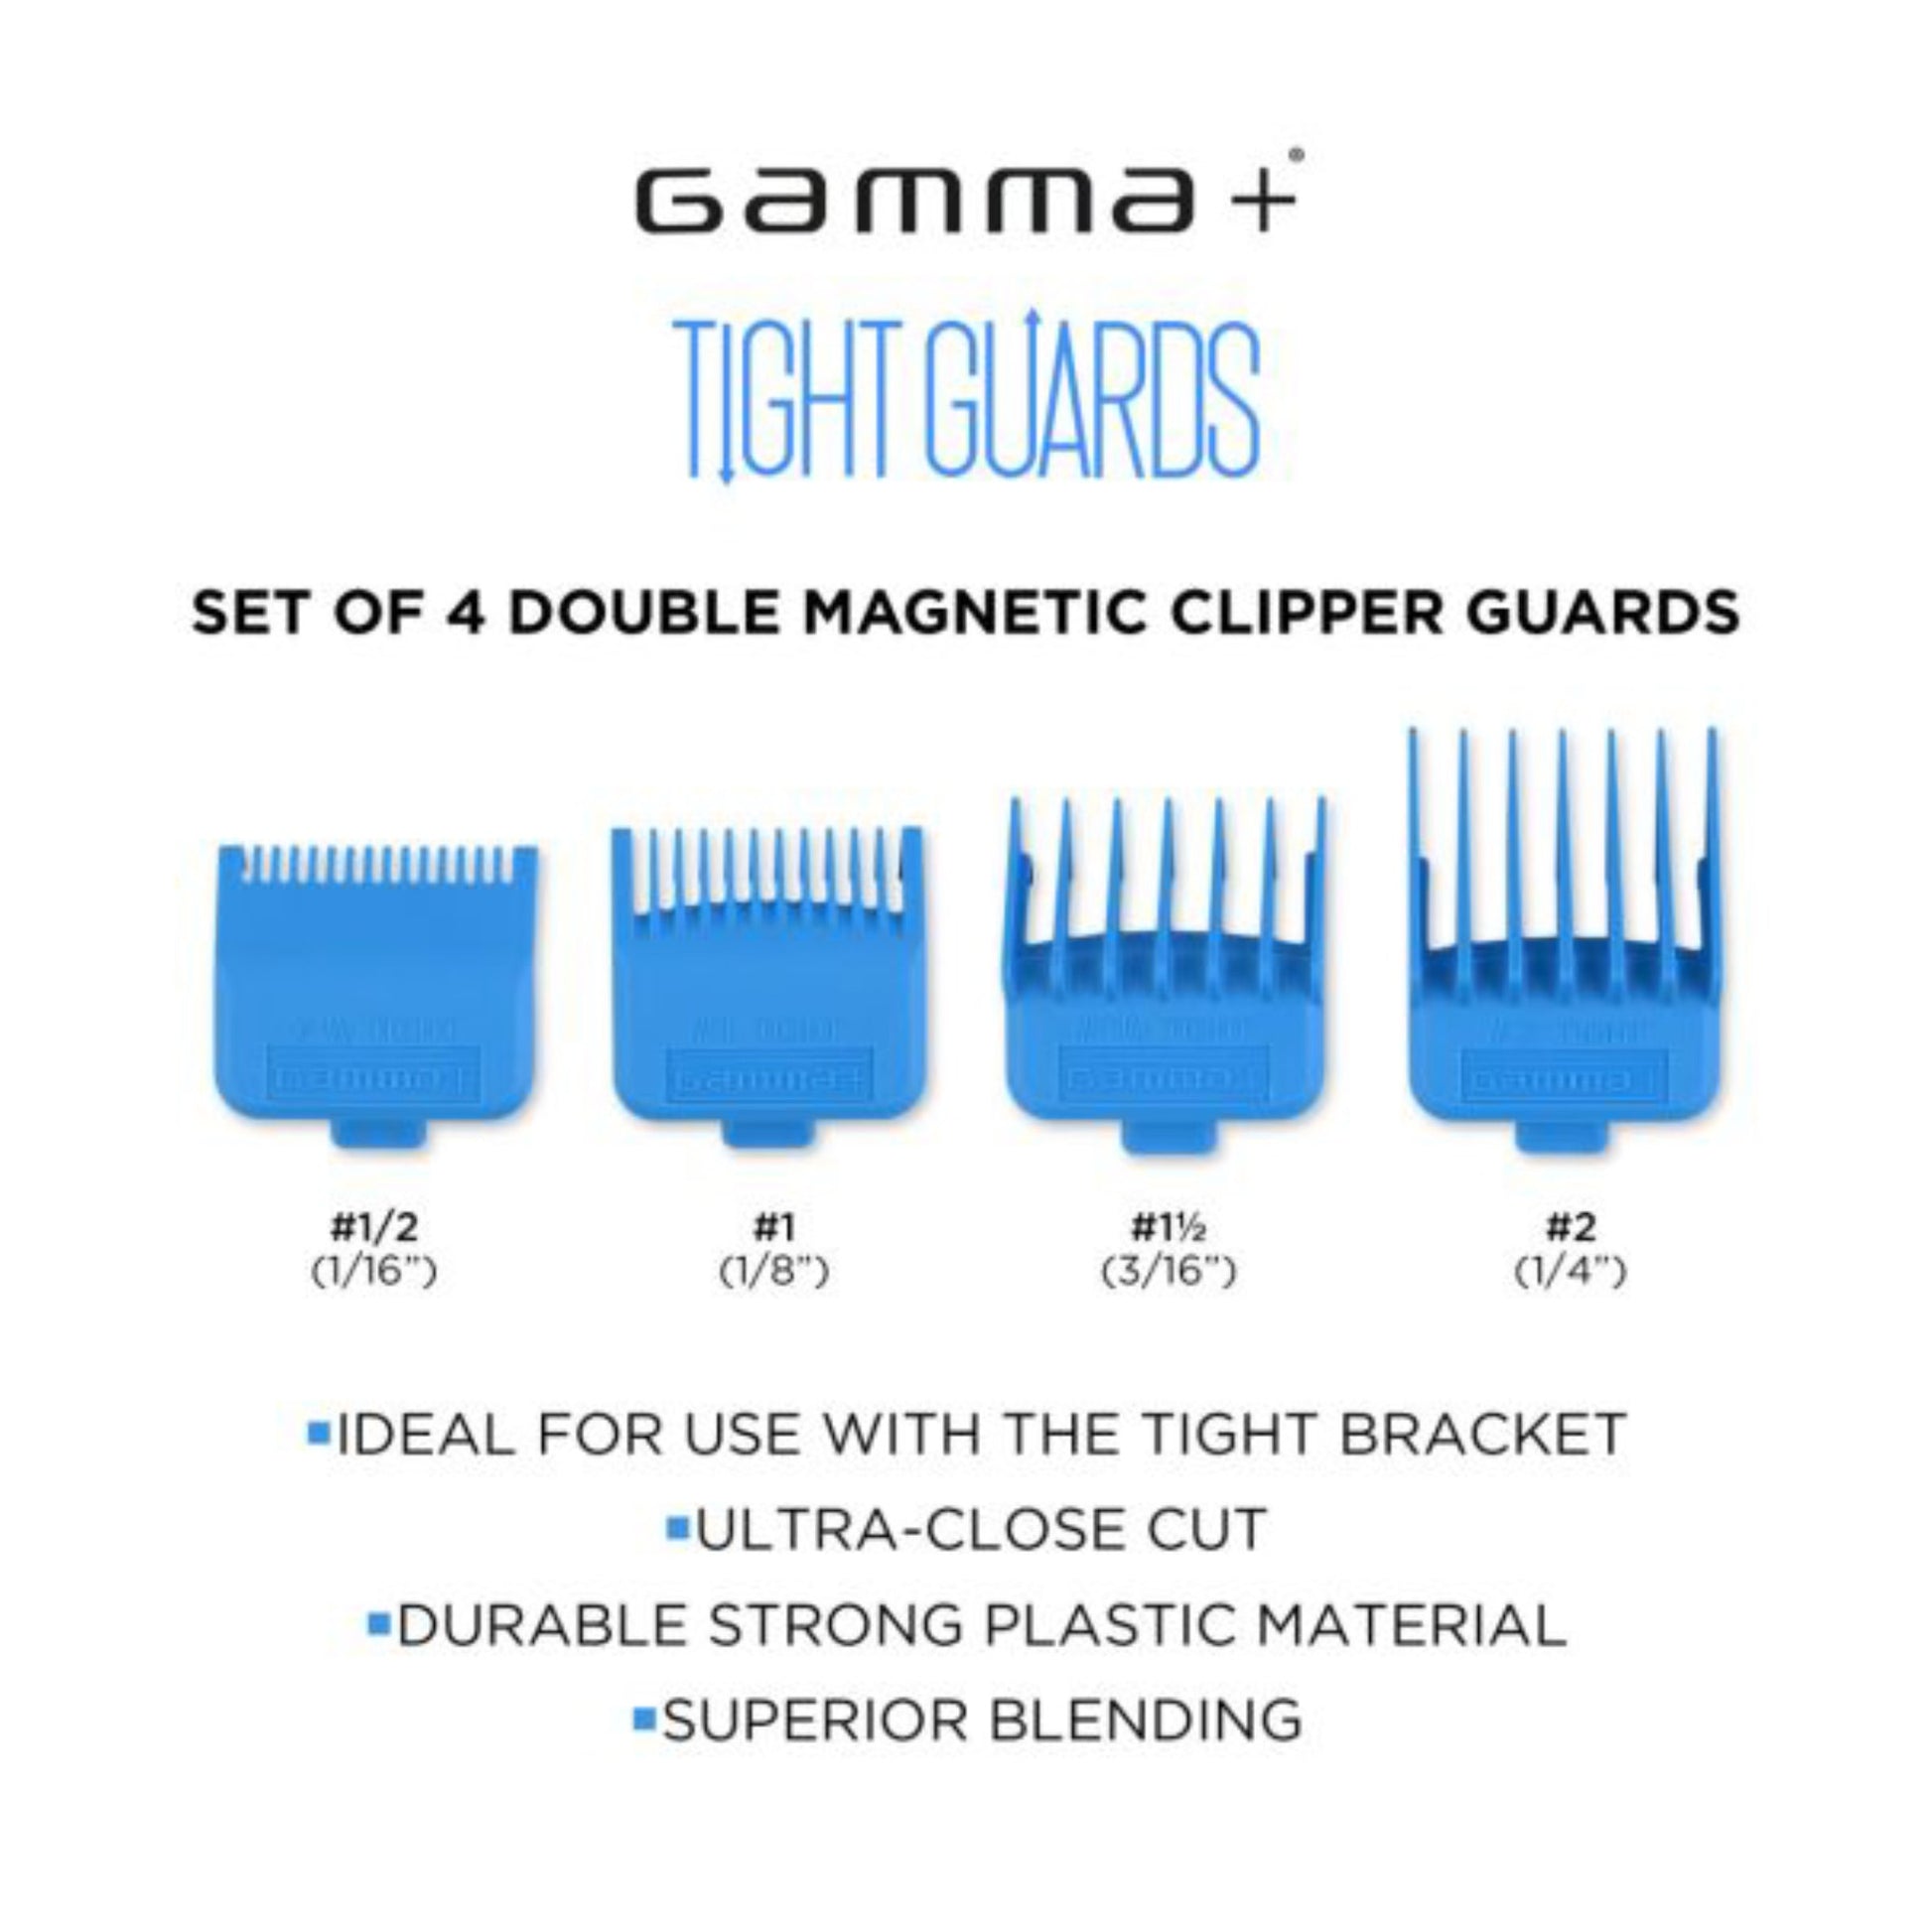 Gamma+ Tight Guards Information